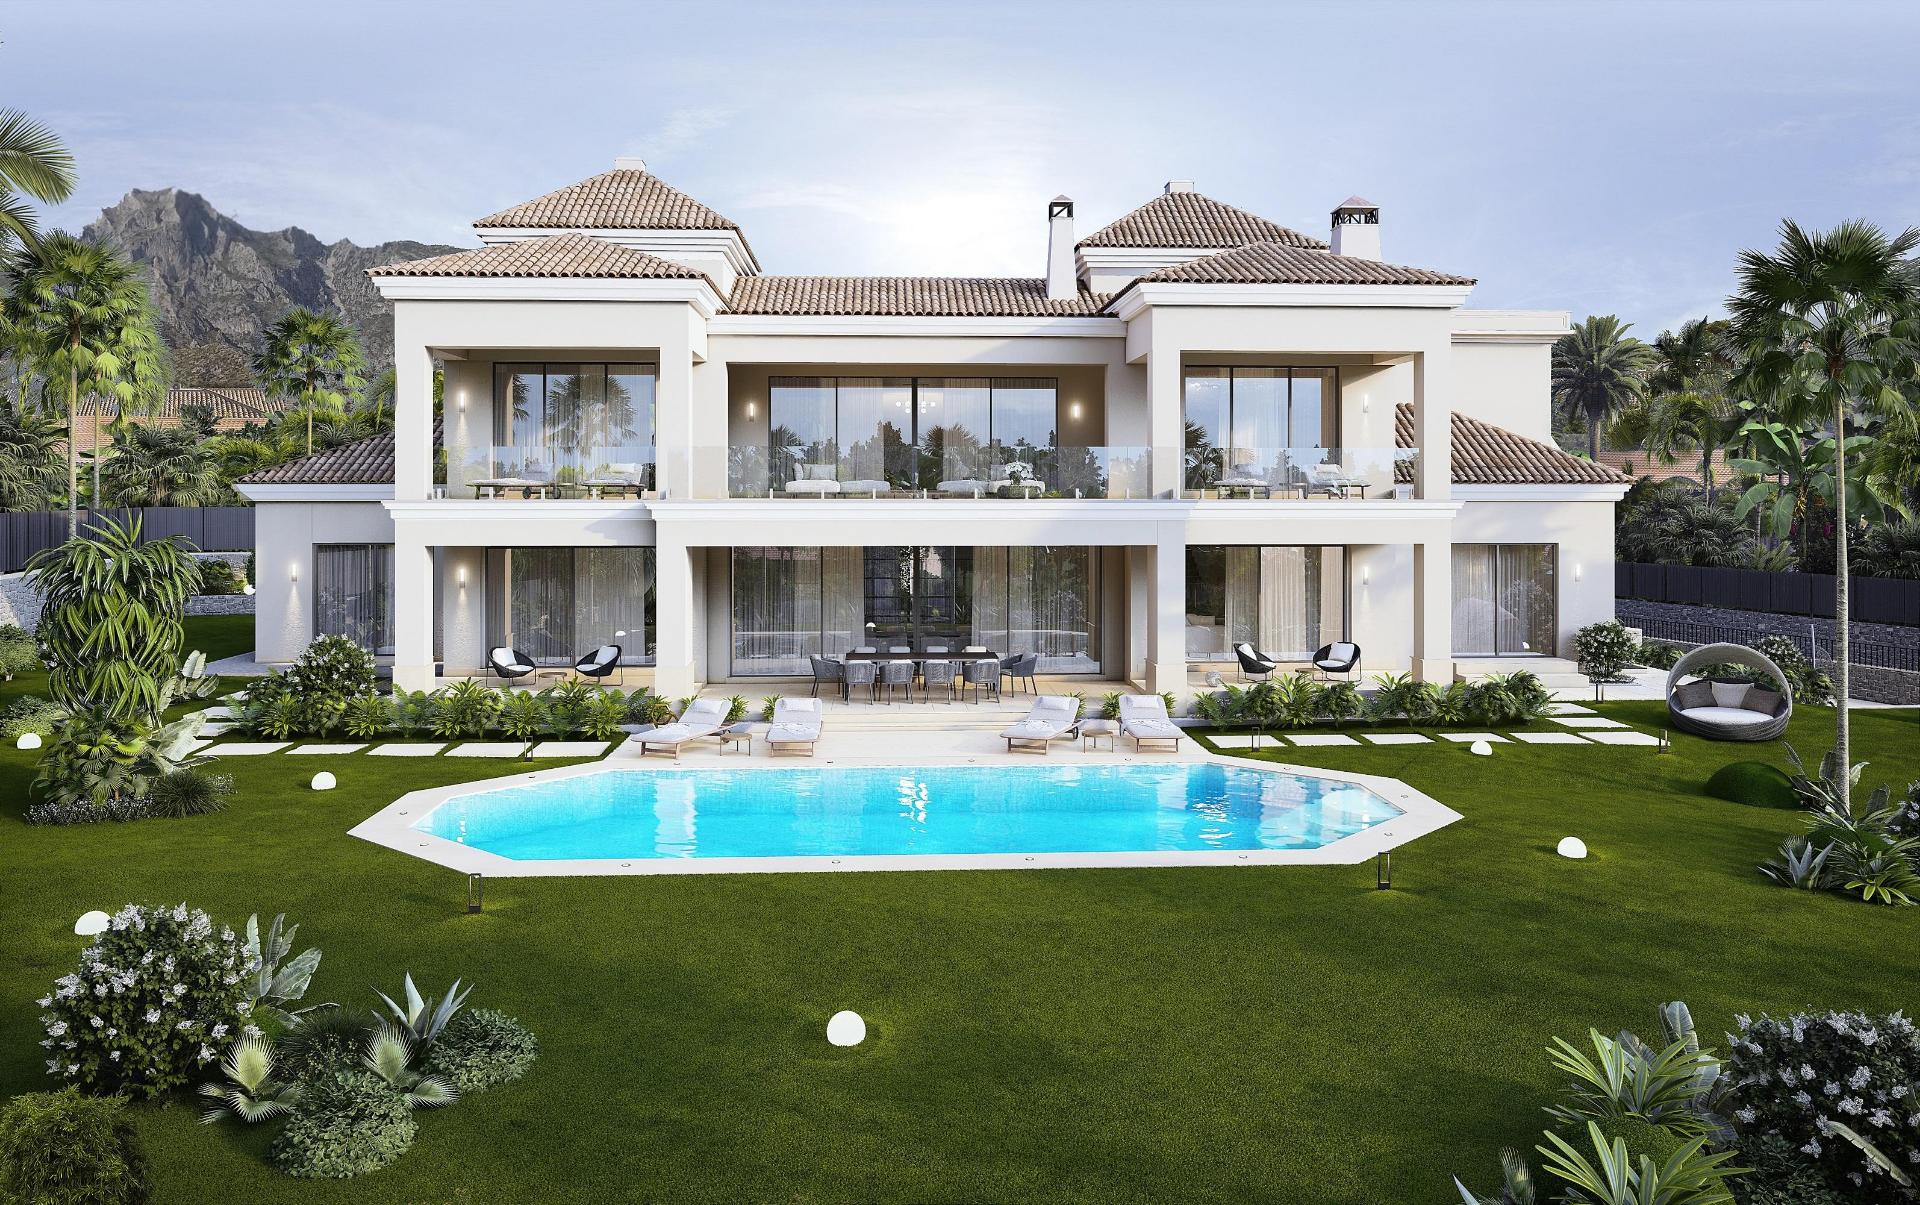 6 bedroom house / villa for sale in Marbella, Costa del Sol